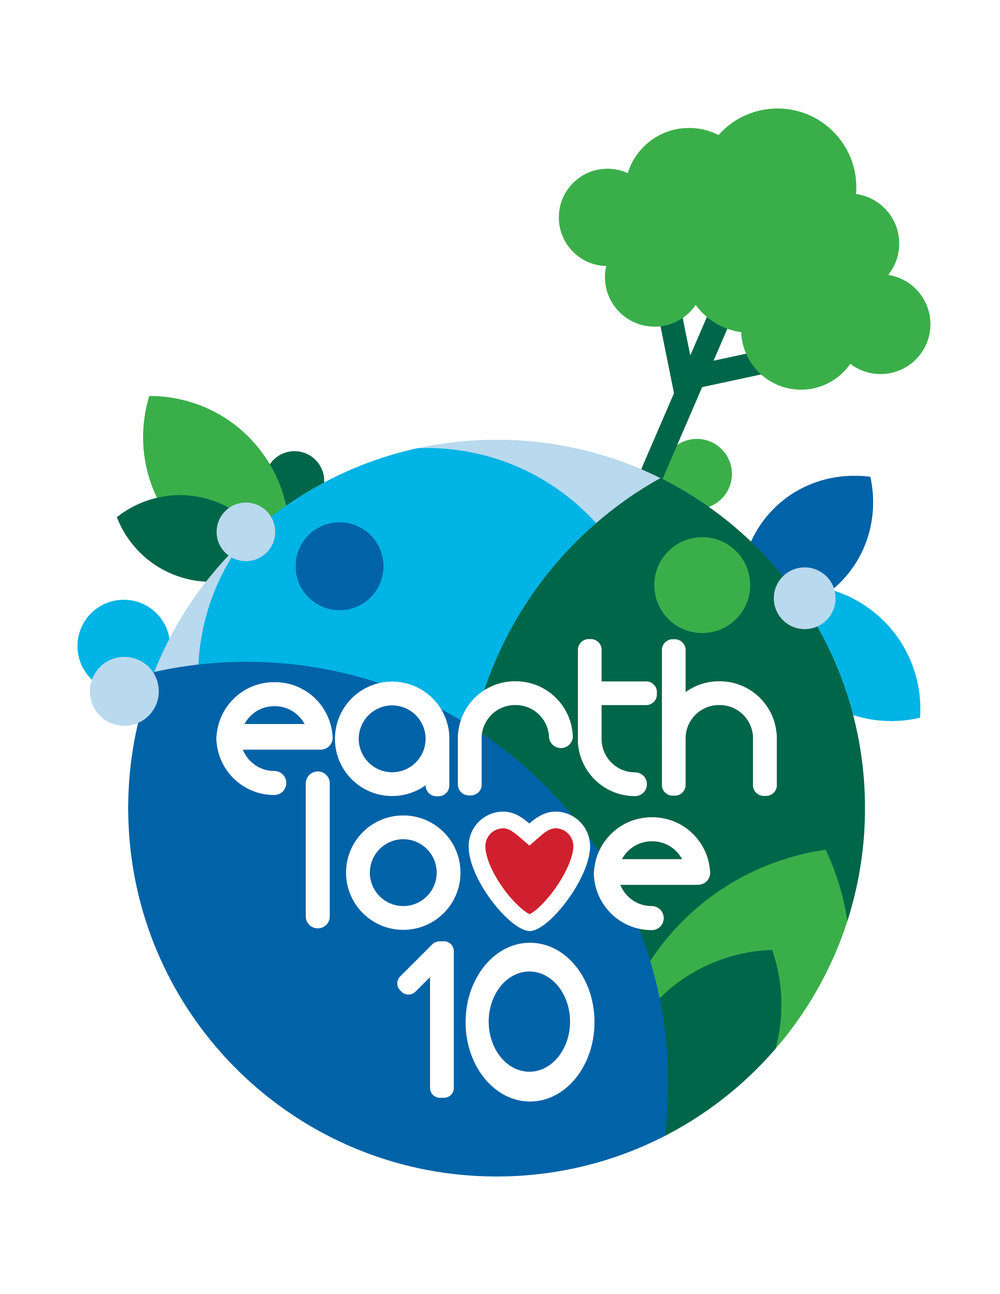 Earth Love 10 layer 03_Full Logo.jpg